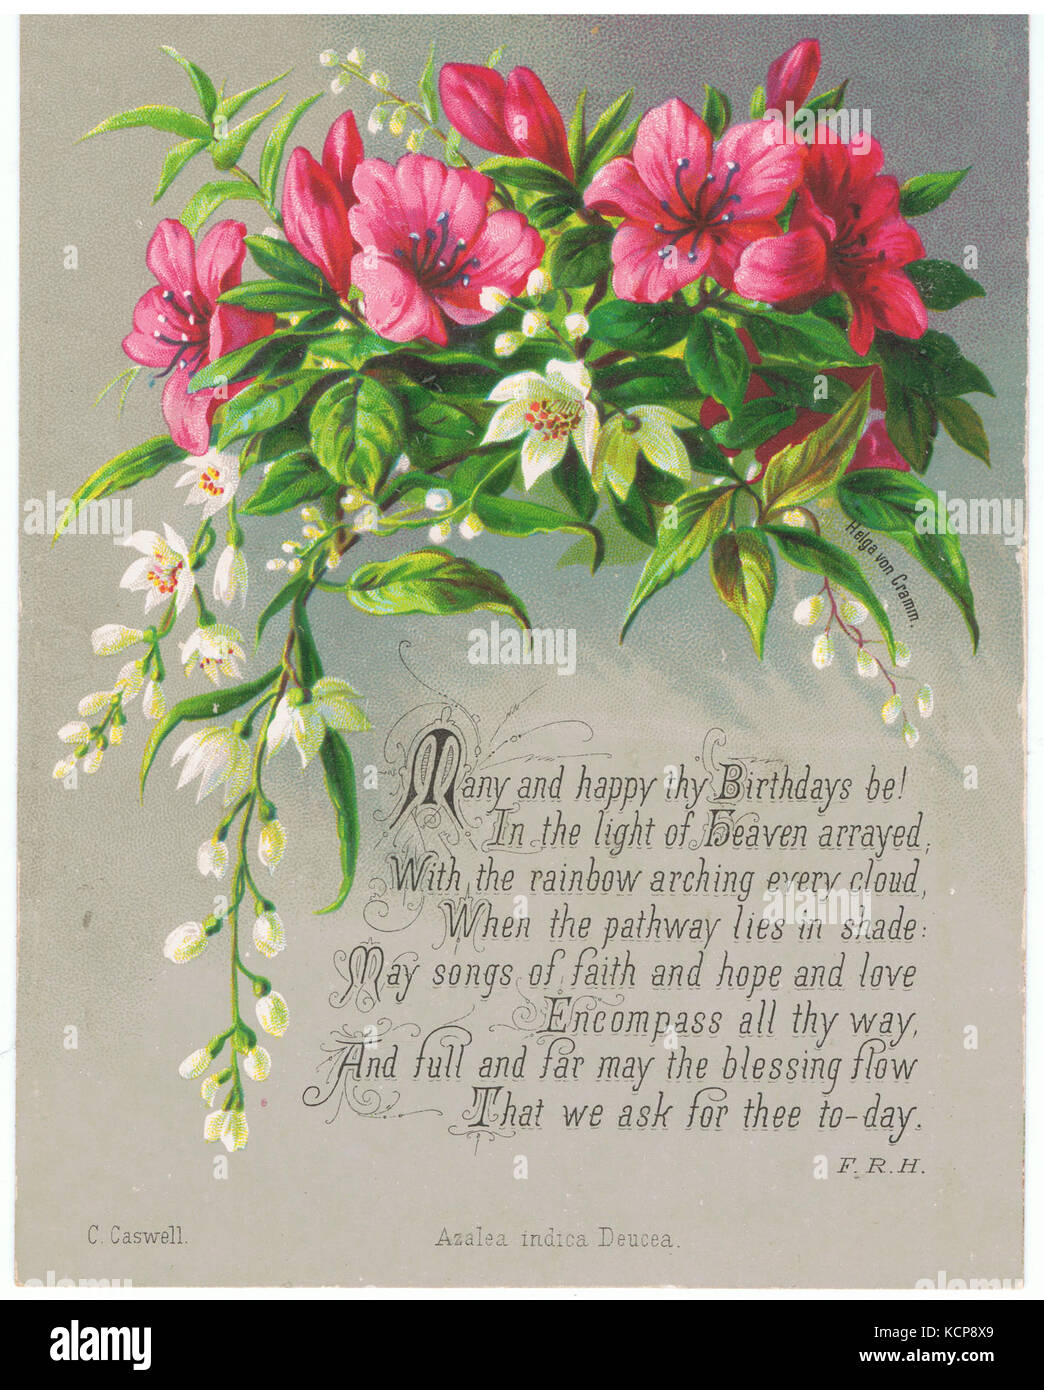 Helga von Cramm. Chromolithograph. Azalea indica deucea. Many and happy Birthdays be! Prayer by F.R. Havergal. C. Caswell. c. 1879 Stock Photo